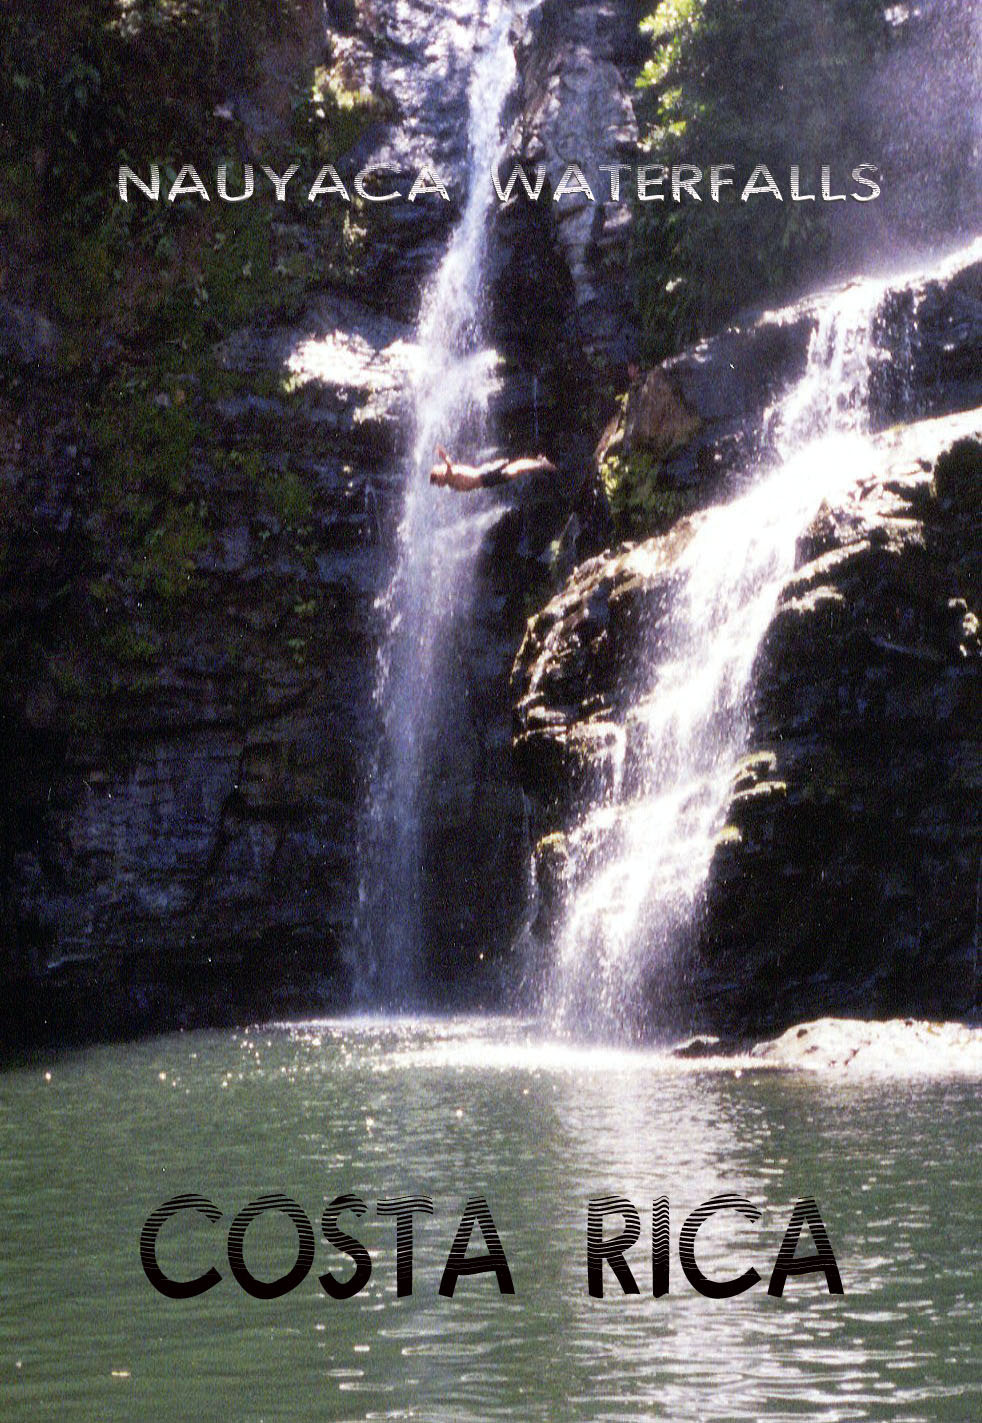 Nauyaca Horseback/Waterfall Tour Dominical Area*****